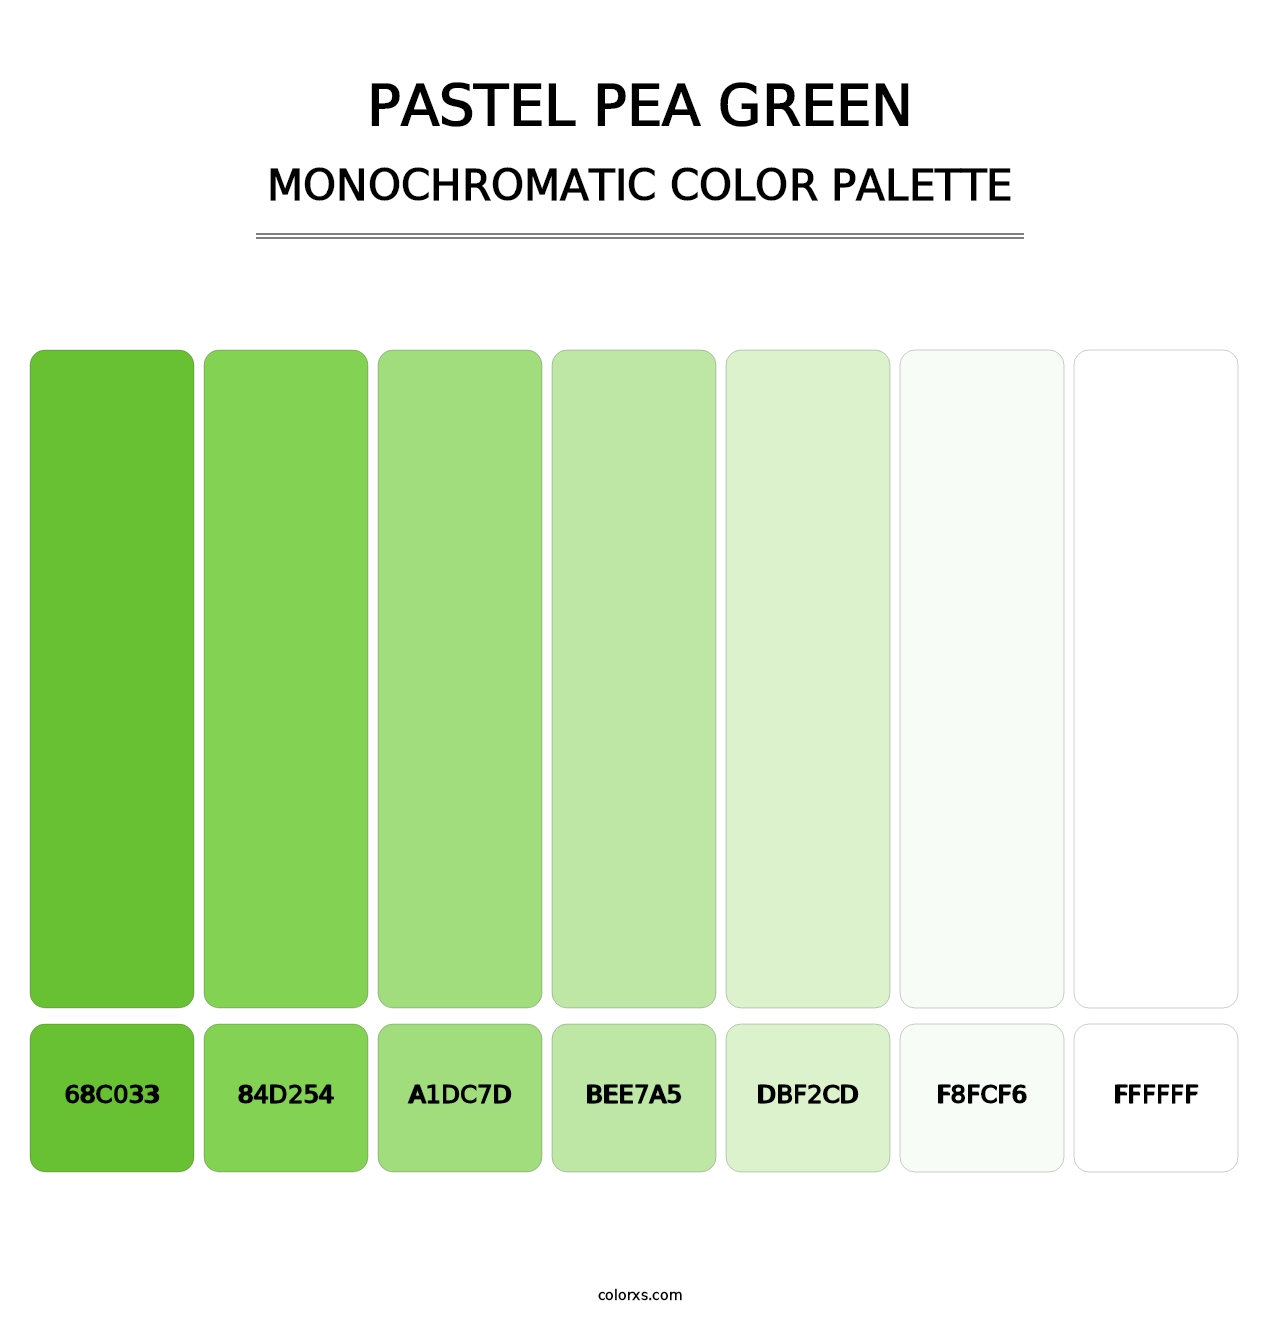 Pastel Pea Green - Monochromatic Color Palette